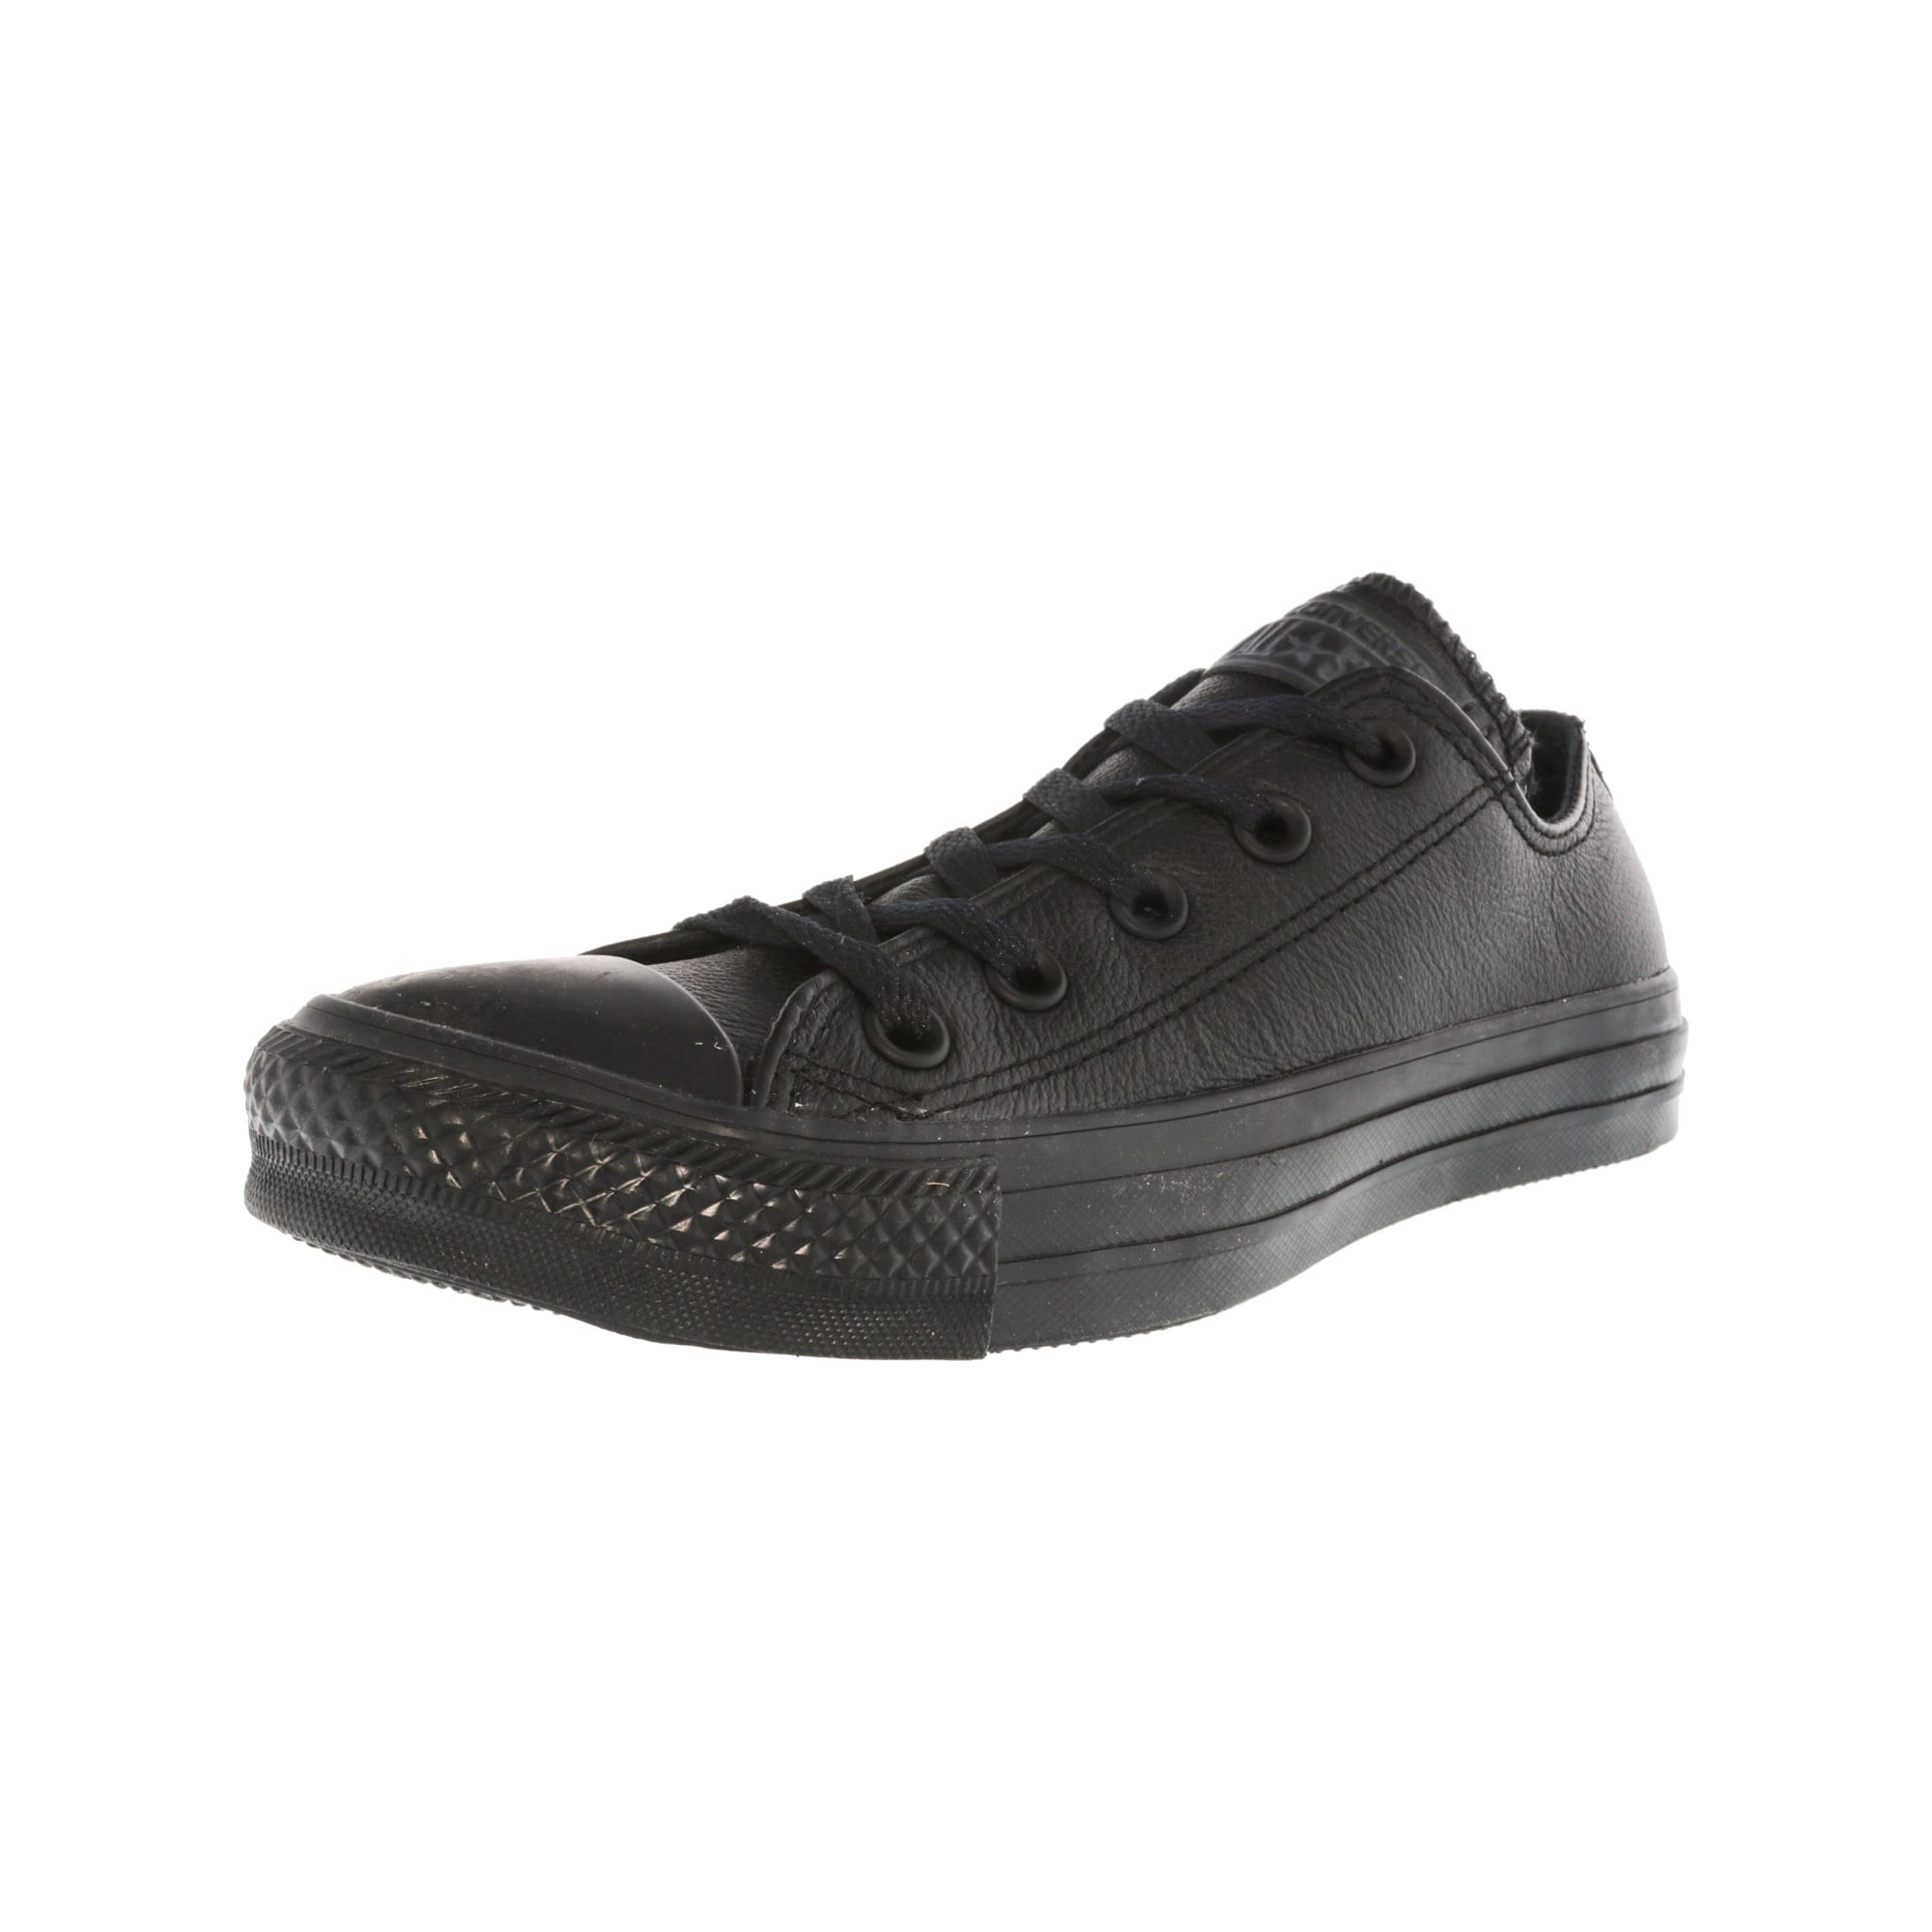 Converse Taylor All Star Ox Black Ankle-High Canvas Fashion Sneaker - 5.5M | Walmart